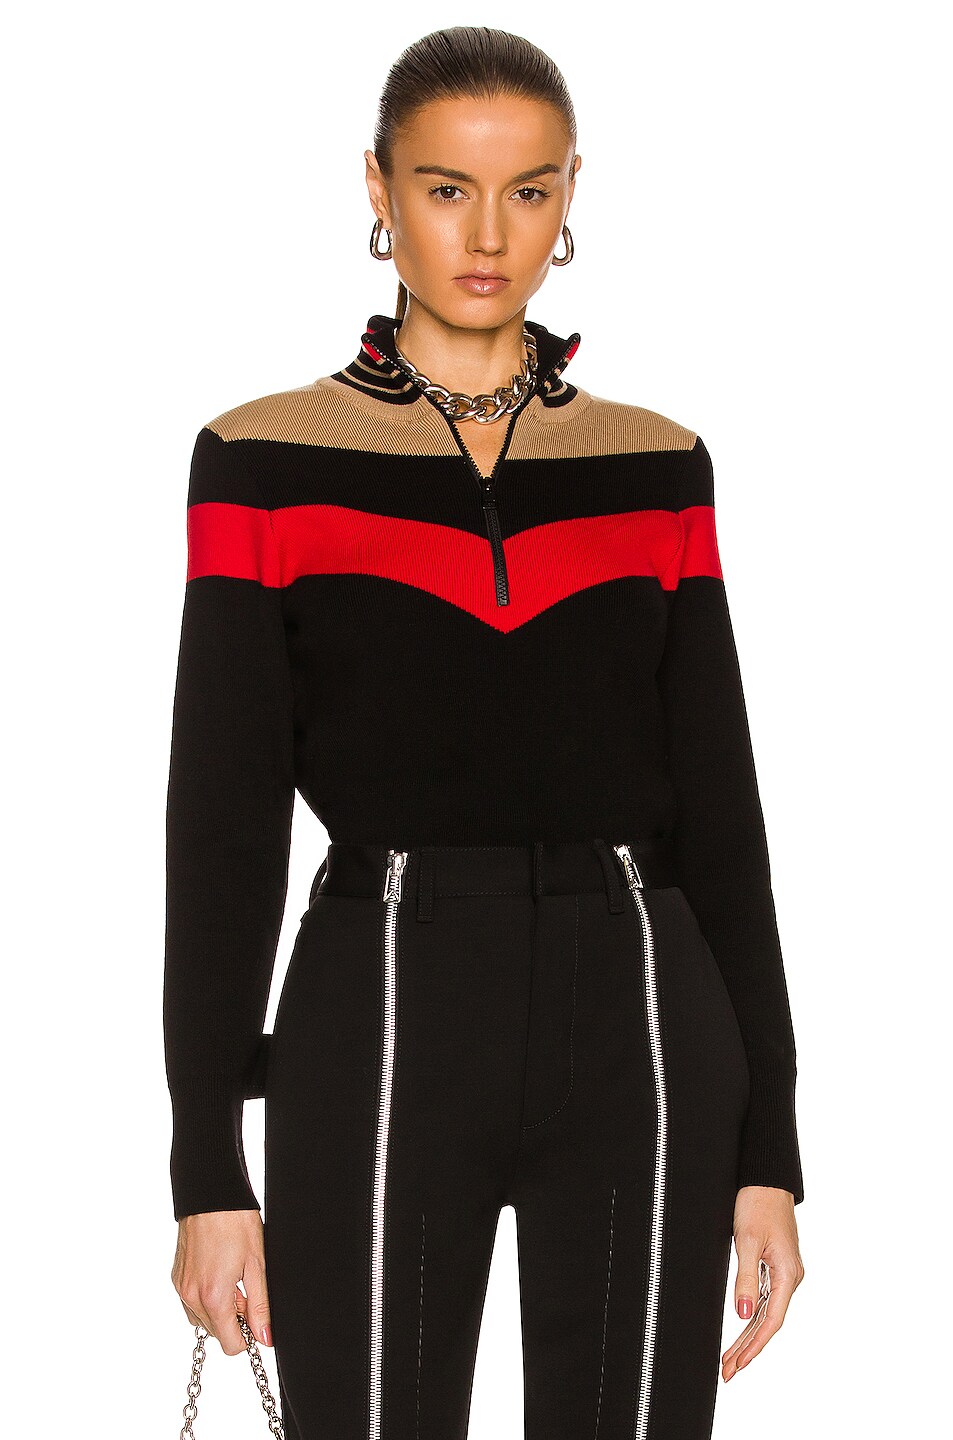 CORDOVA The Eldora Sweater in Onyx, Fiery Red & Latte | FWRD